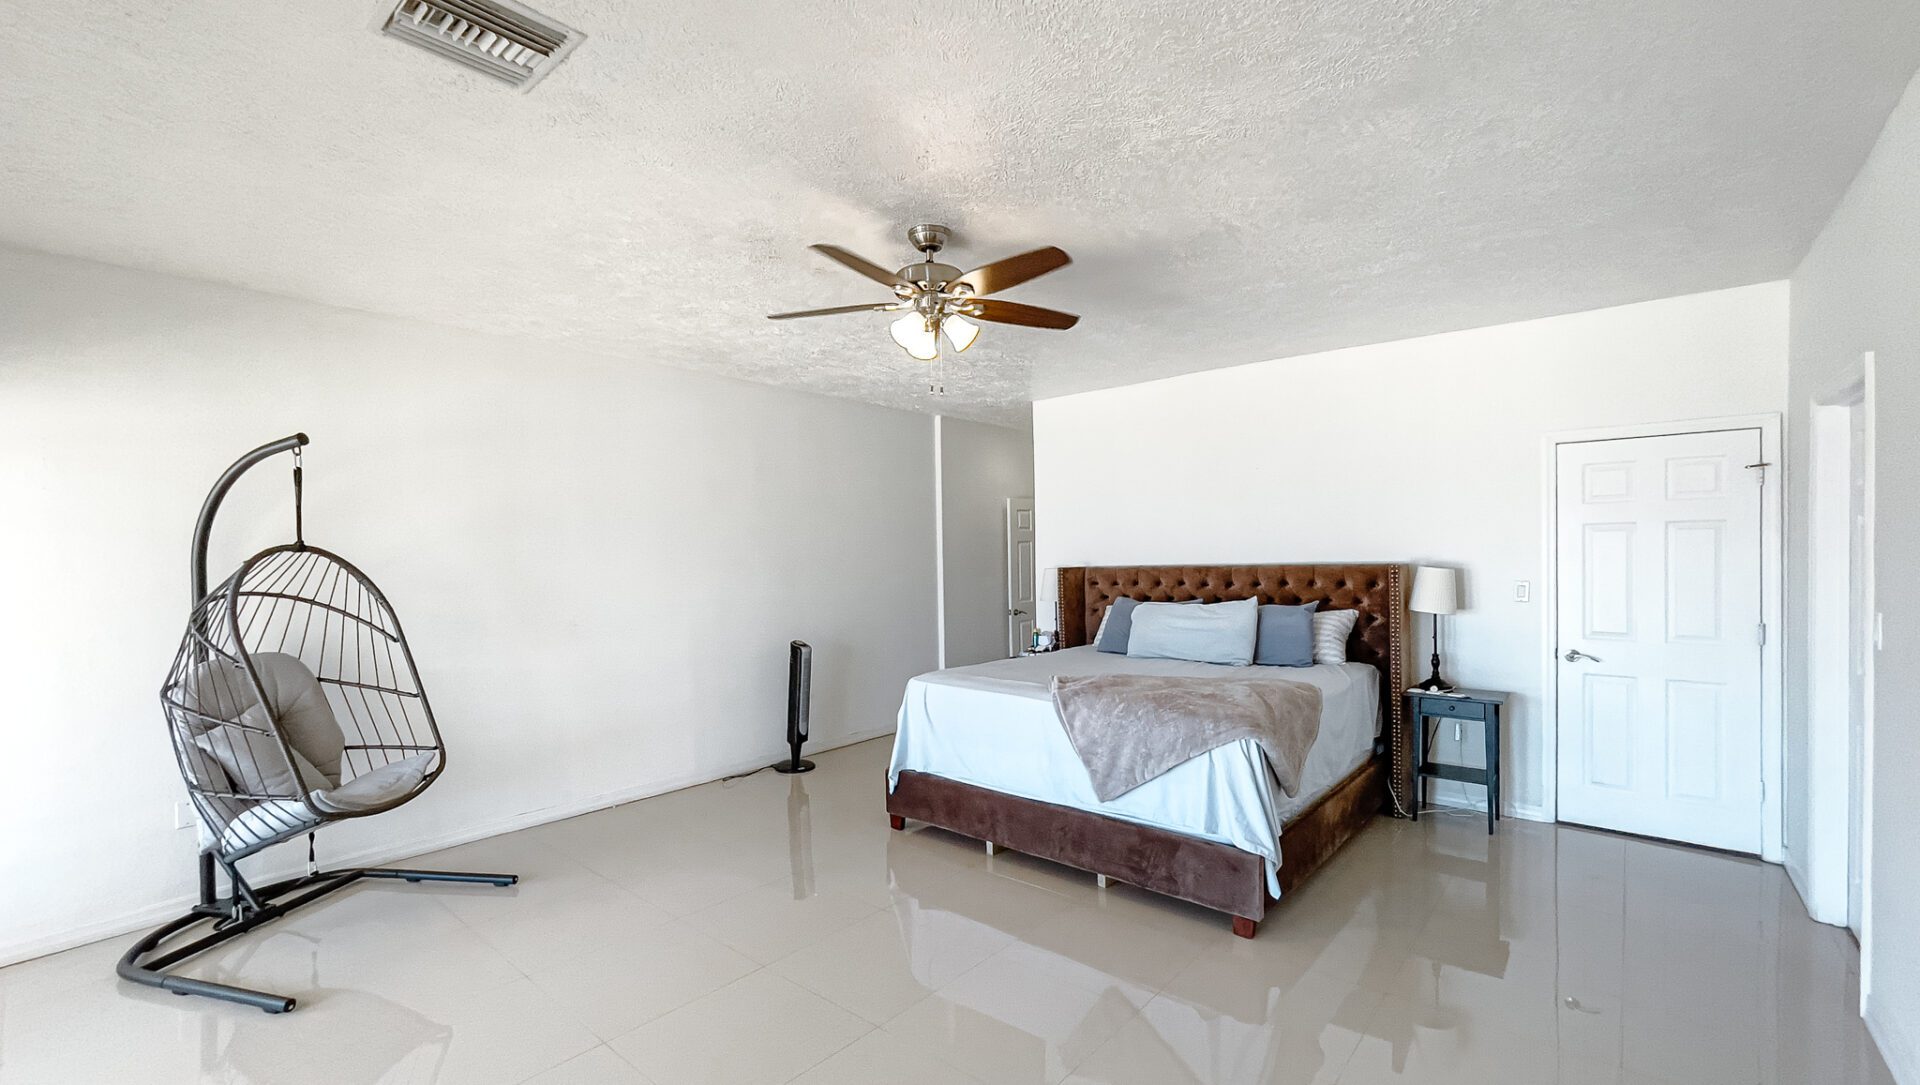 Cayman Brac bedroom